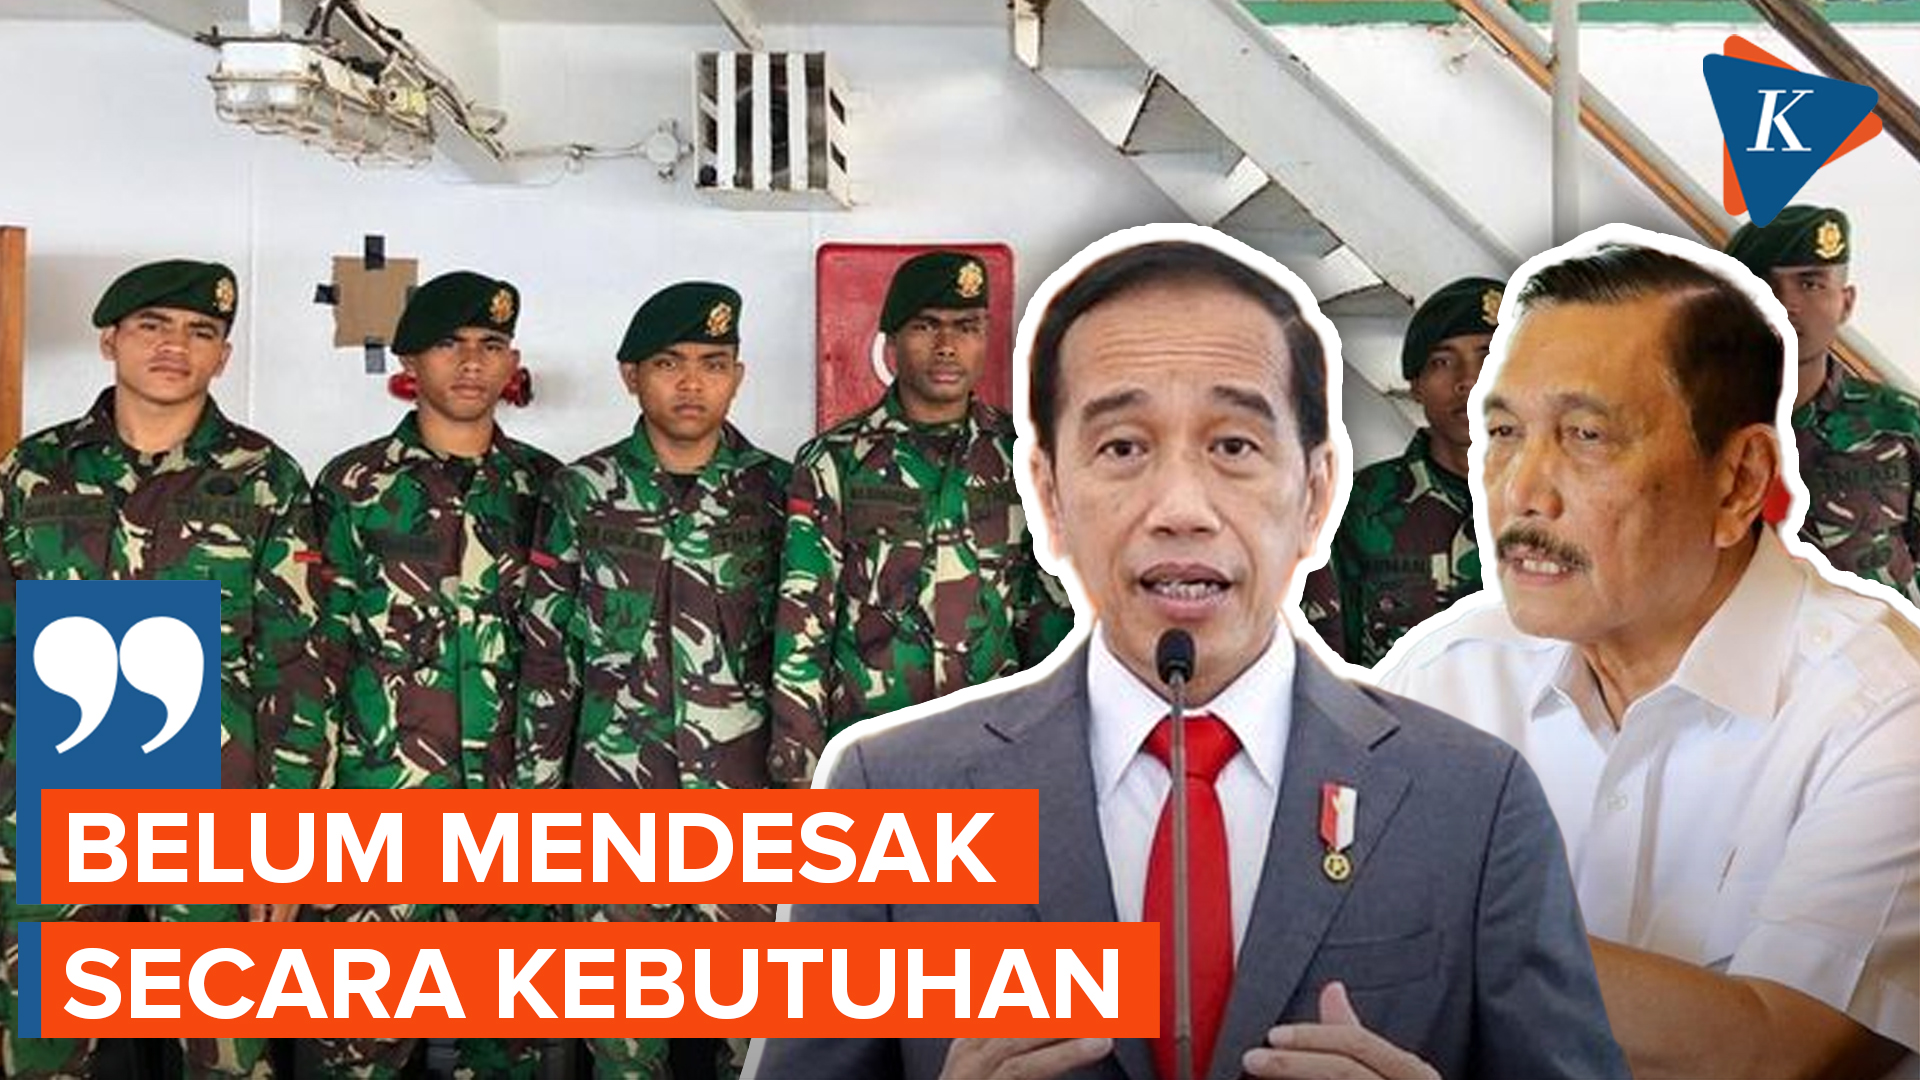 Kata Jokowi soal Luhut Usul TNI ke Pemerintahan